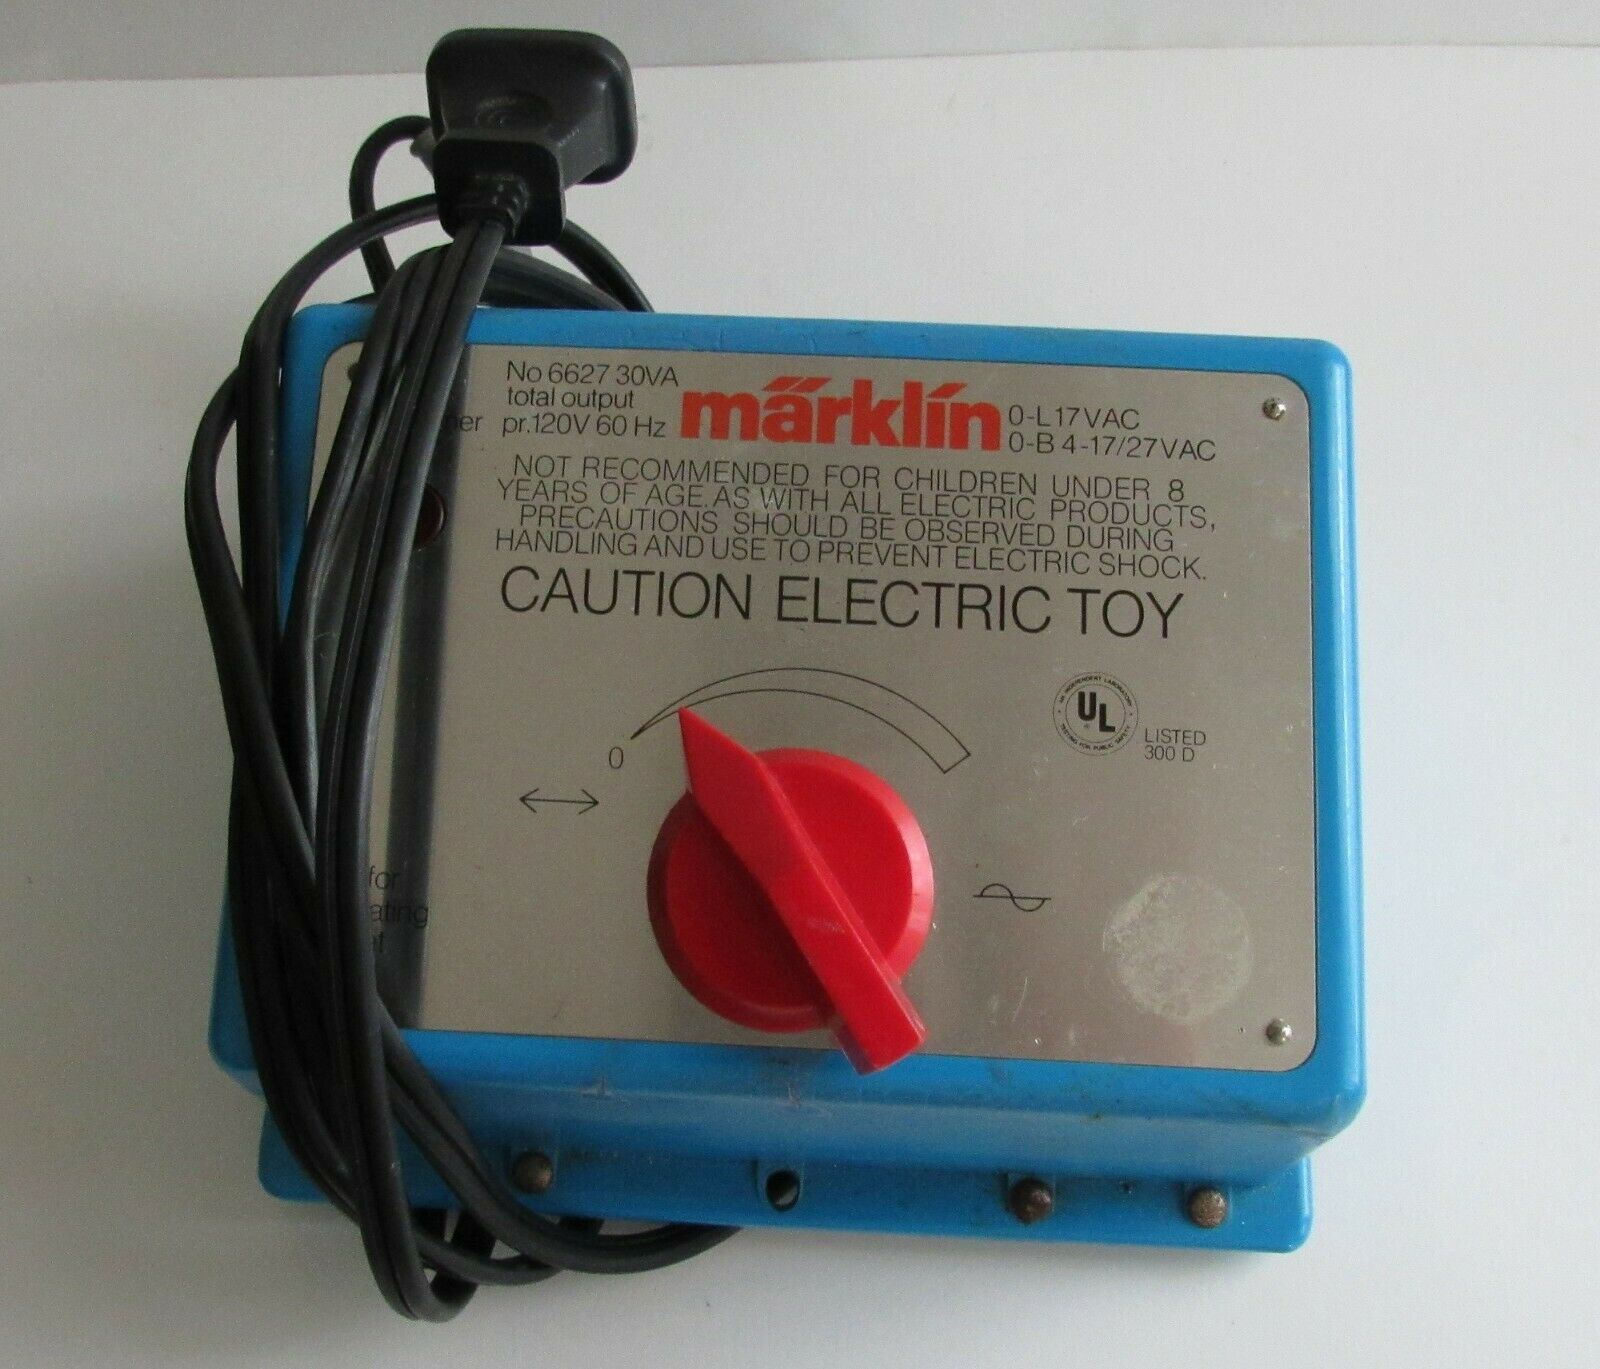 Marklin Ho #6627 Power Ac Transformer Power Pack ~ 30 Va Total Output - Tested